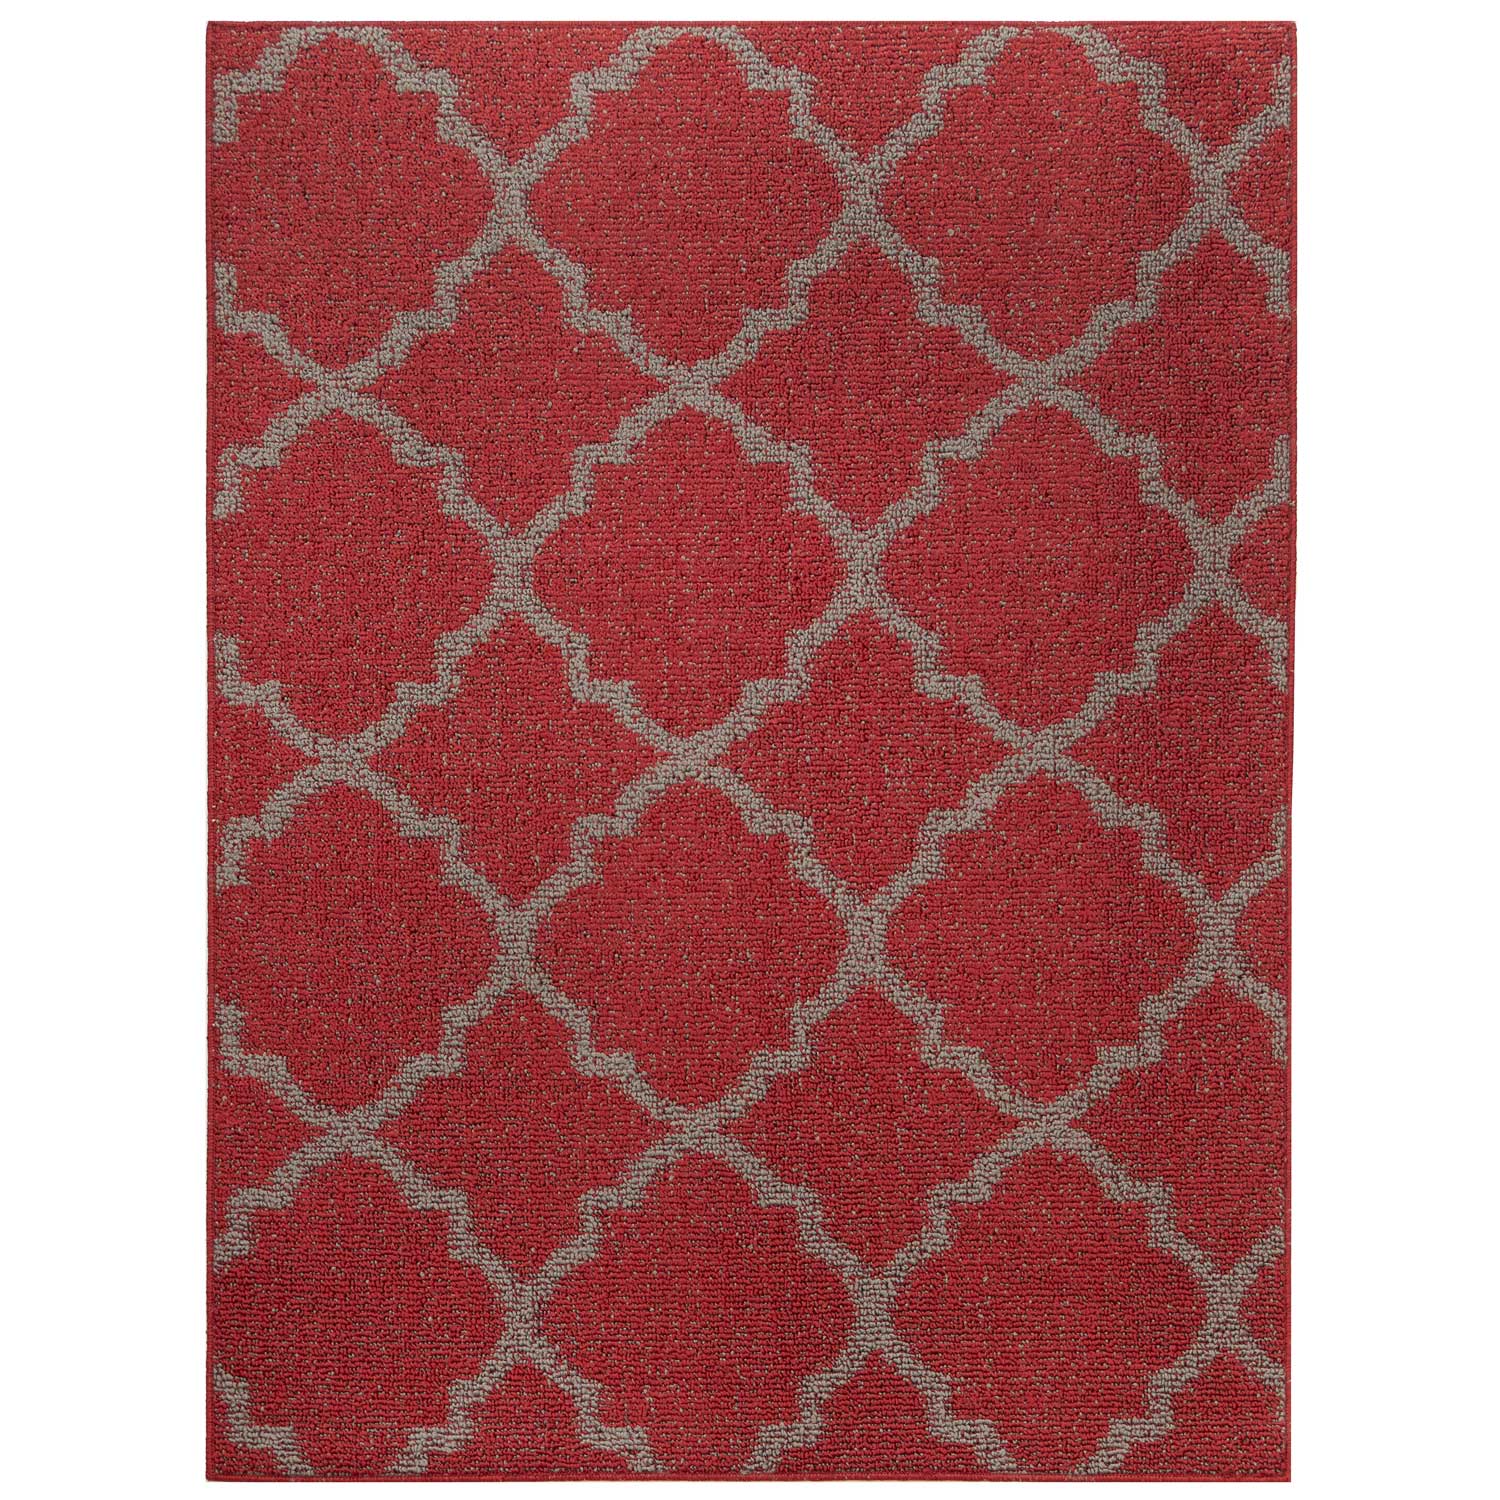 CASABLANCA Collection, rug, cayenne, 3'x4'